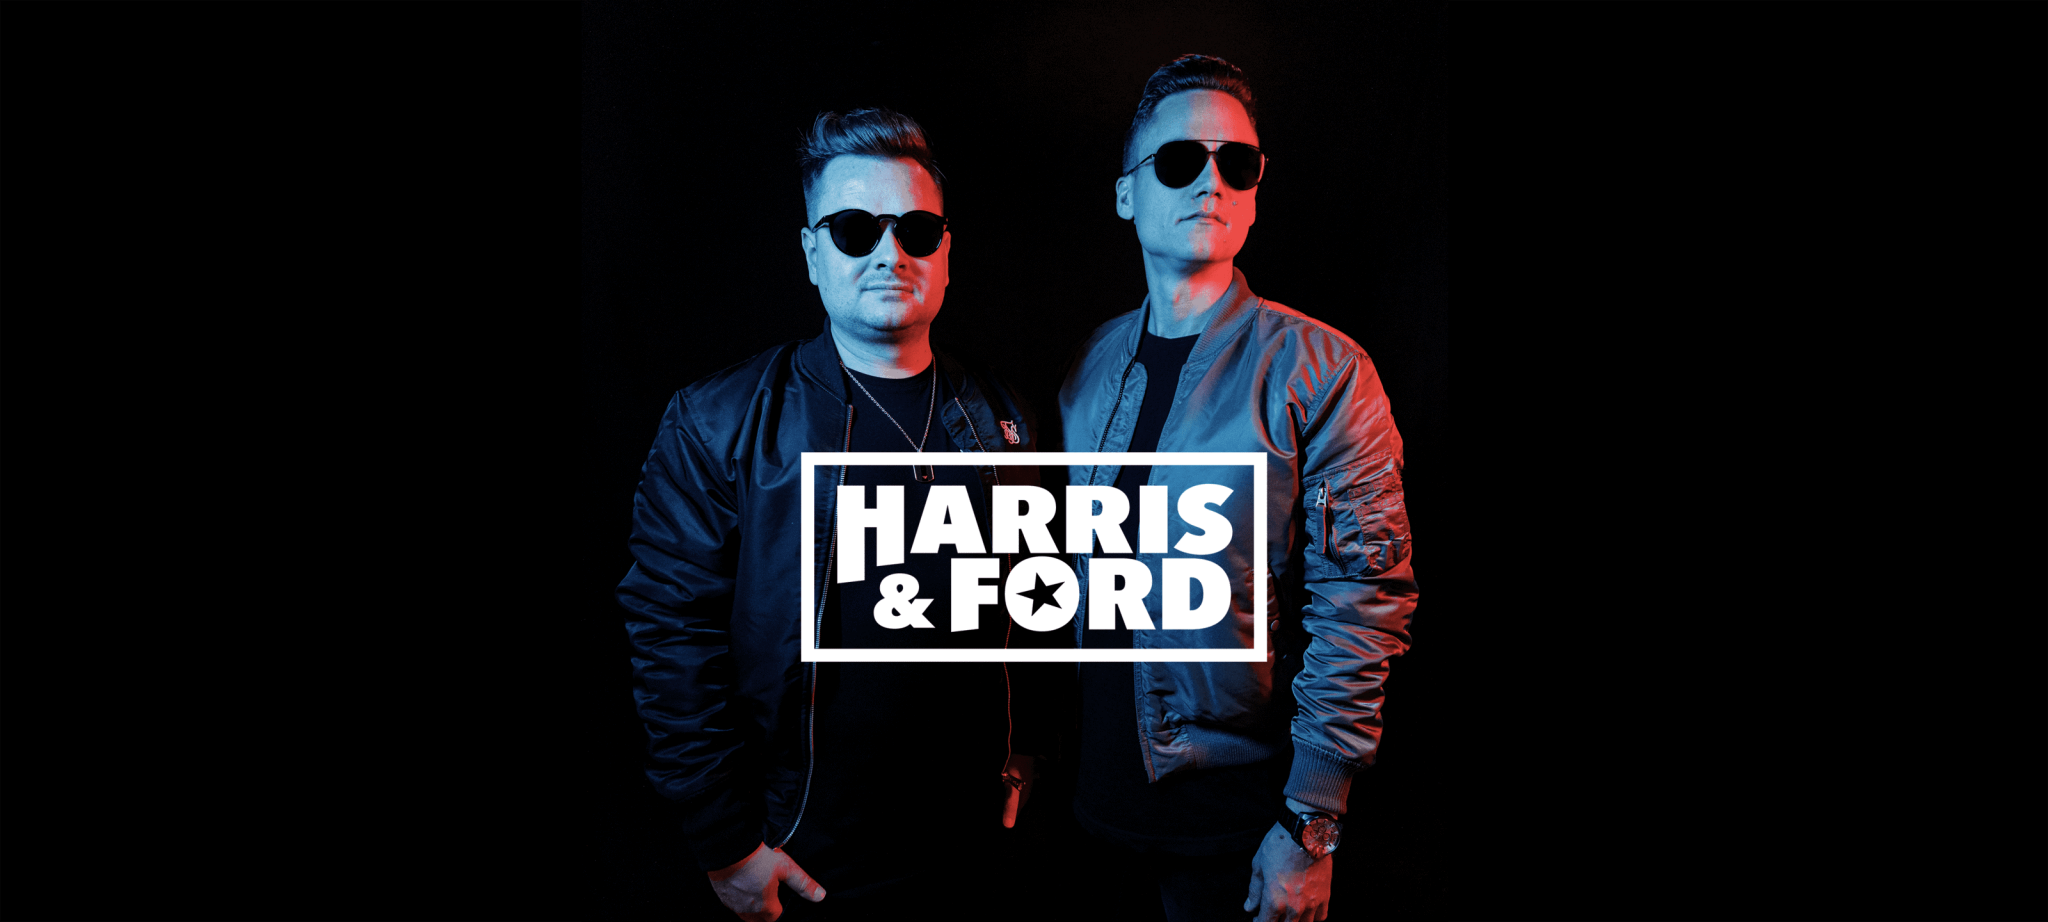 Harris & Ford - Offizielle Webseite - Austrian DJ team